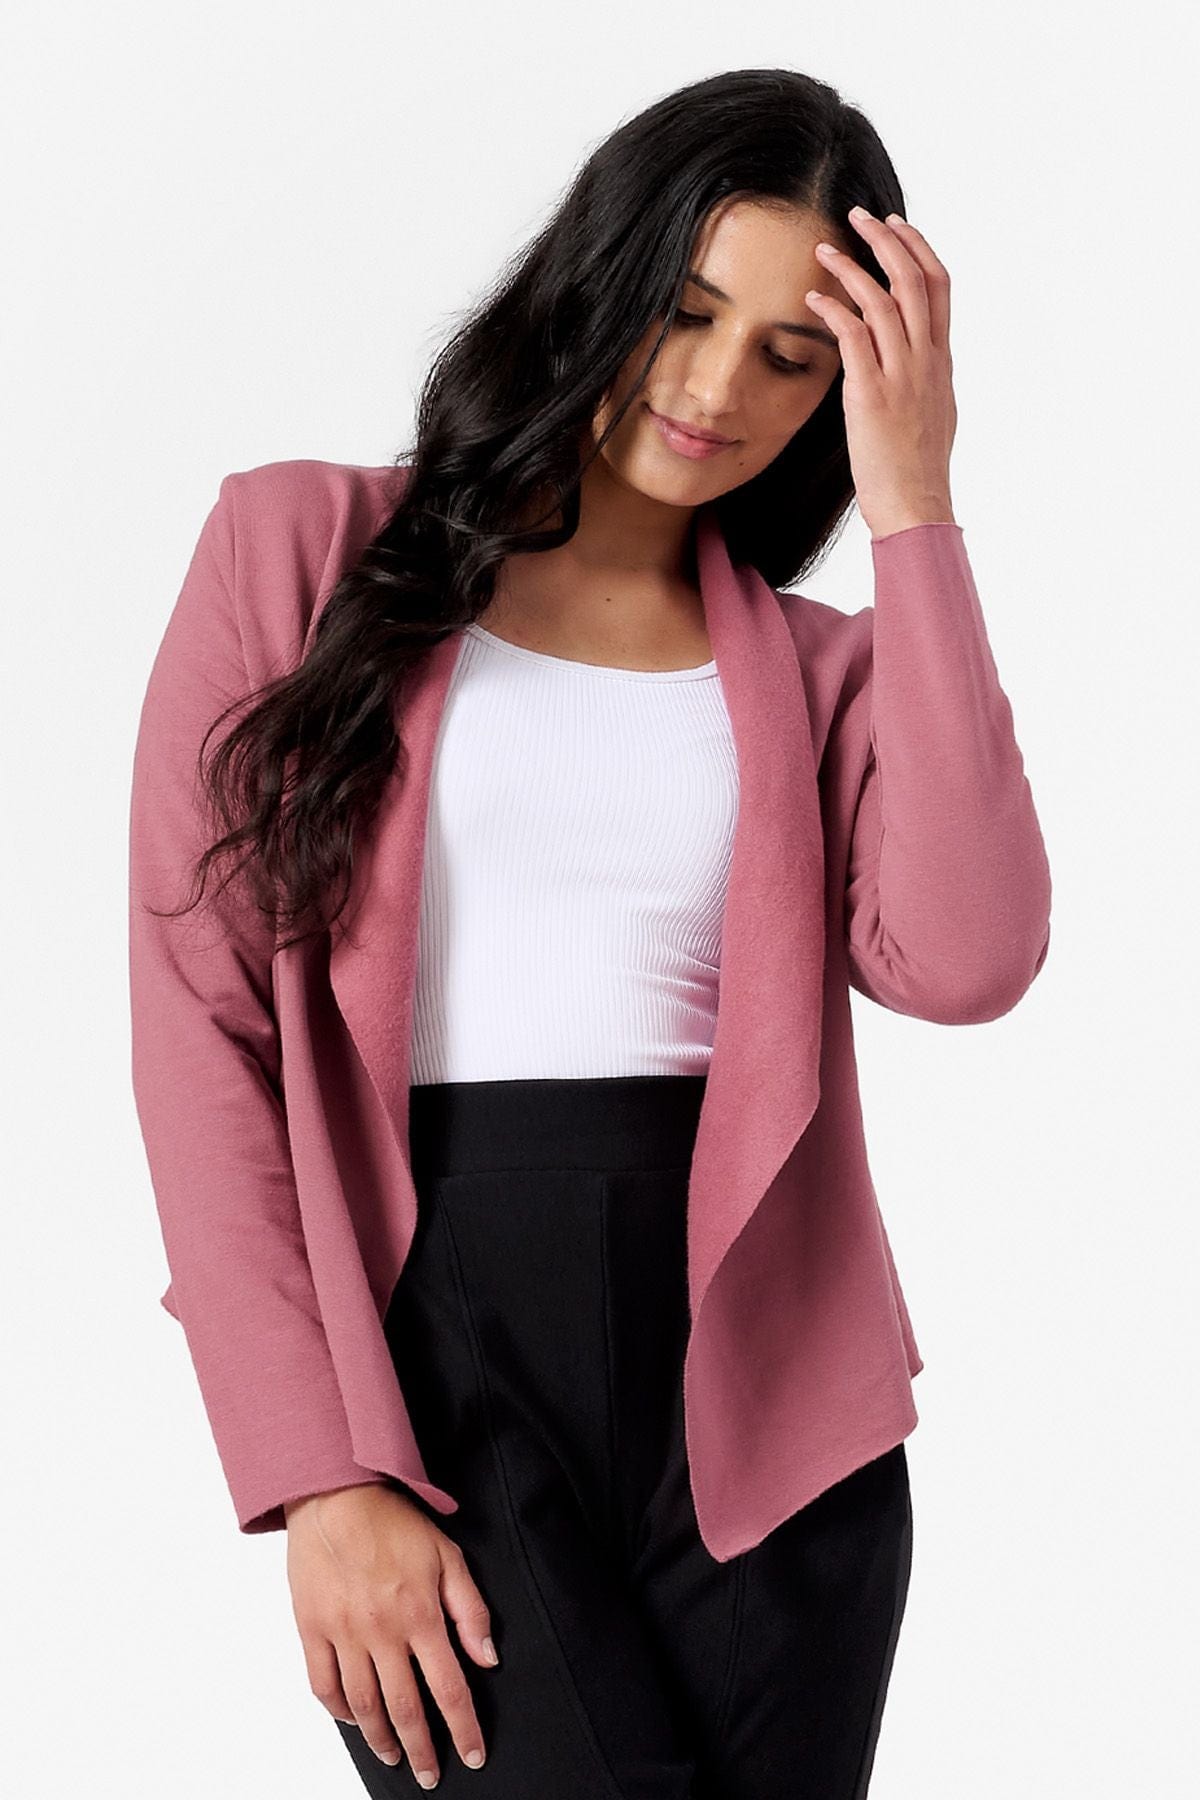 Woman smiling wearing a pink jacket